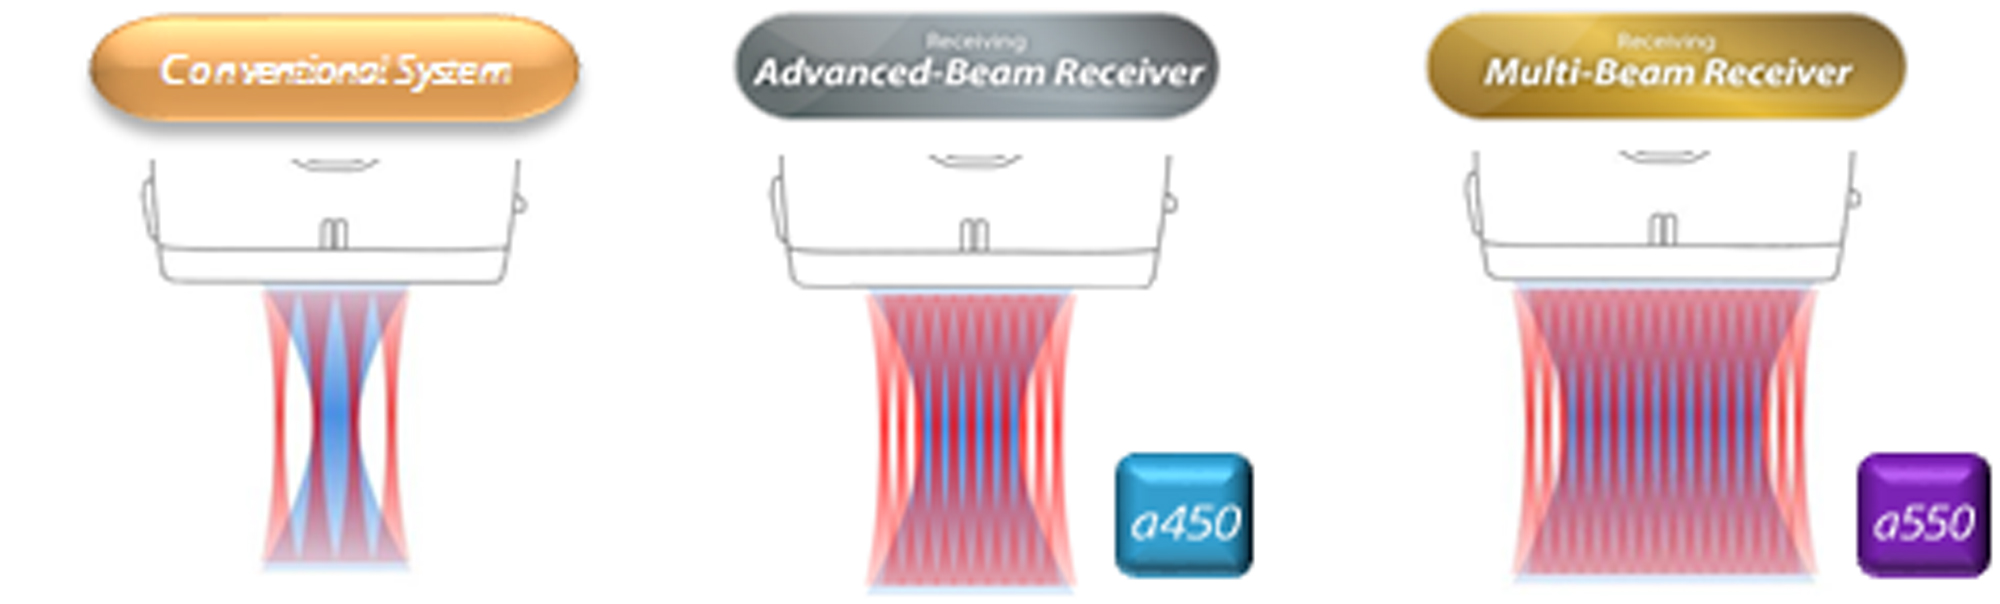 Multi-Beam Receiver / Advanced-Beam Receiver